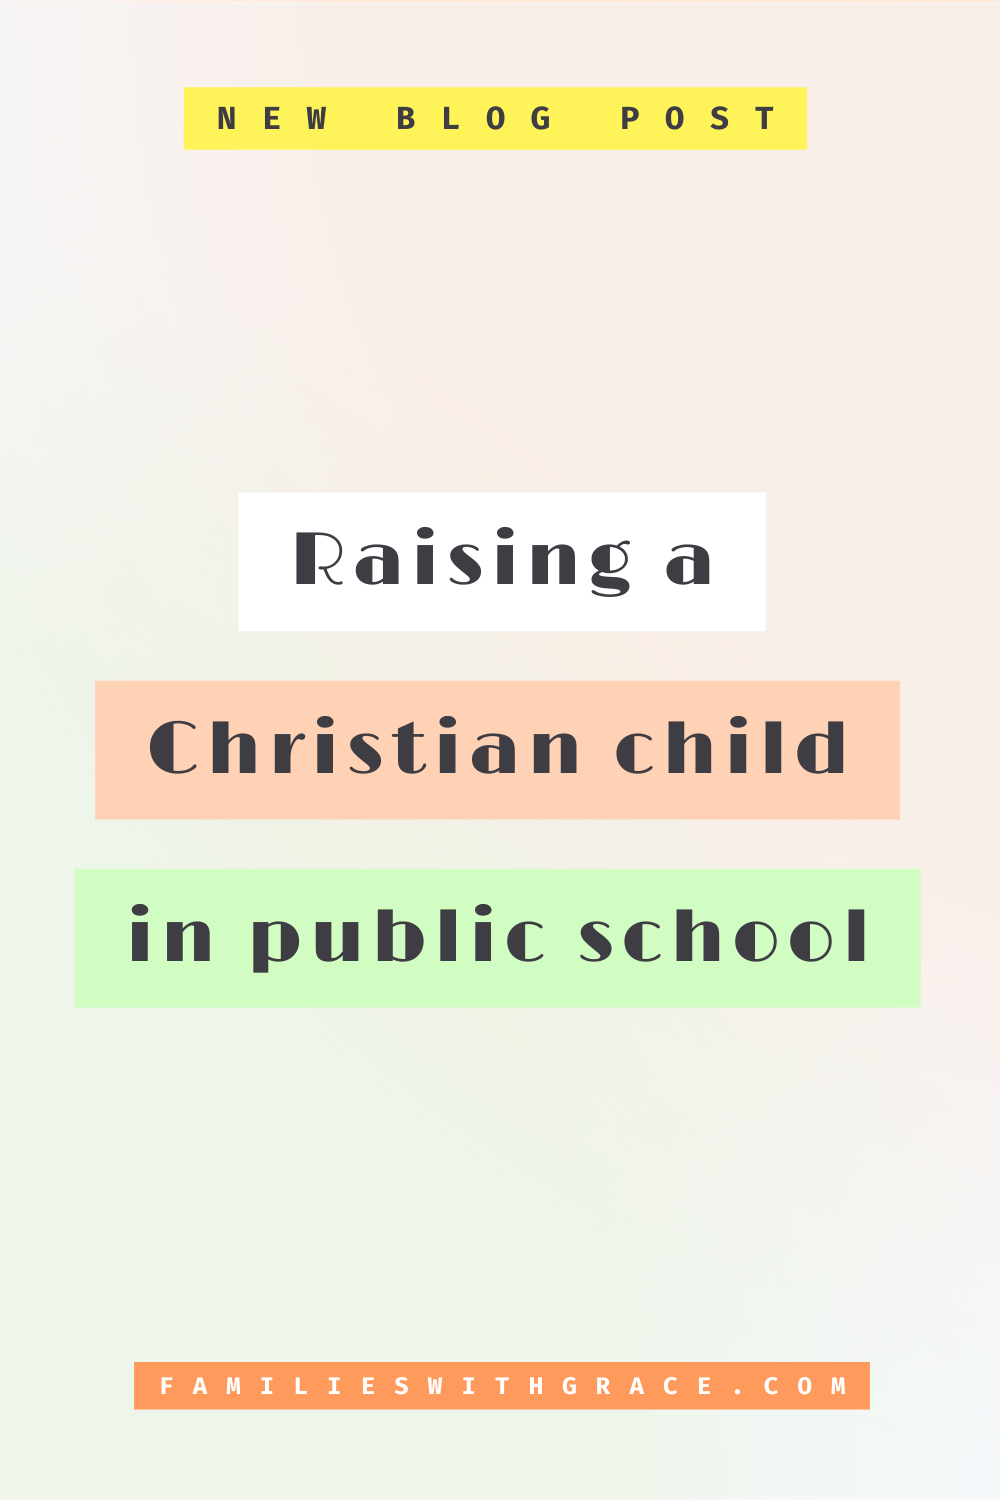 Raising a Christian child in public school